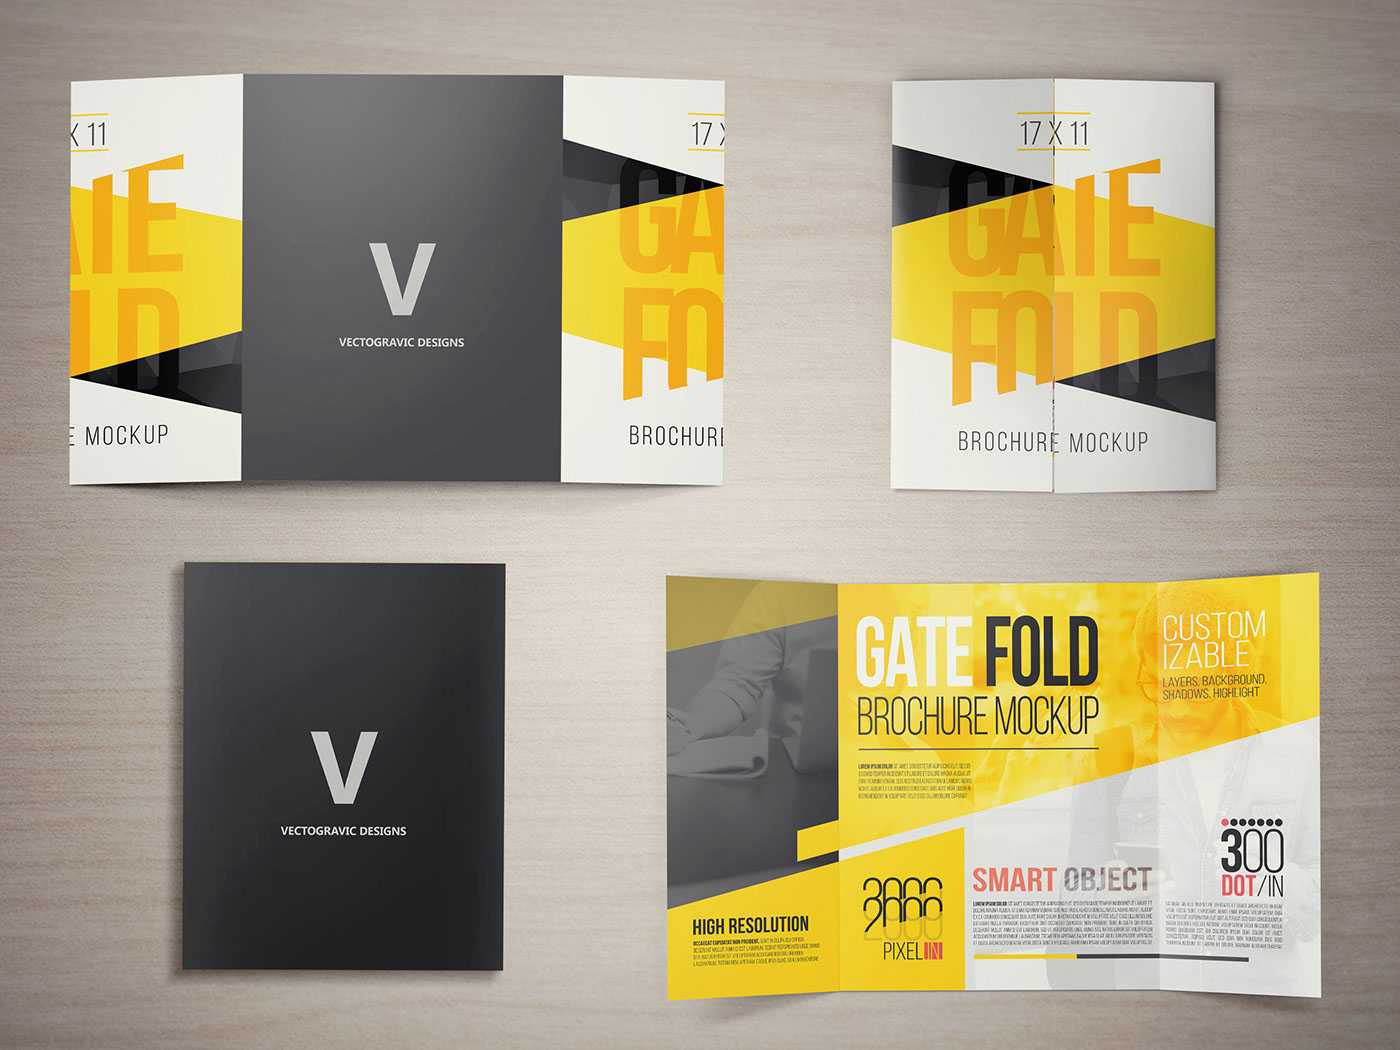 17 X 11 Gate Fold Brochure Mockup On Behance With Gate Fold Brochure Template